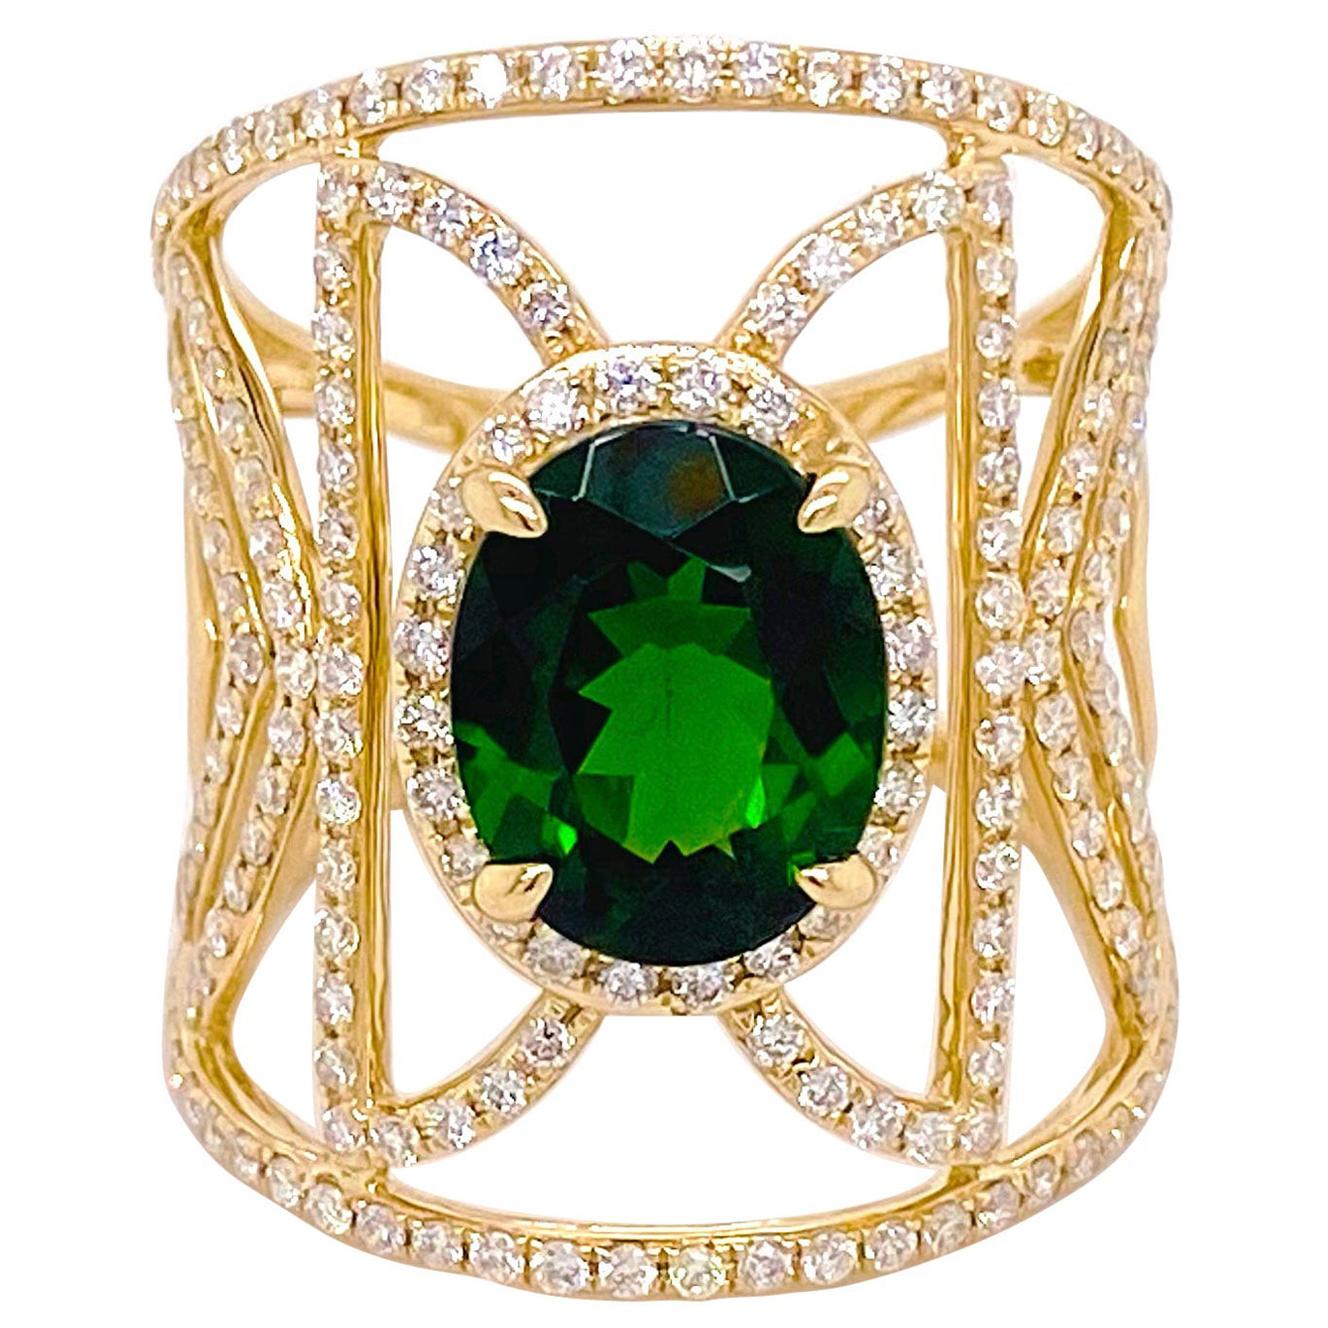 Russalite Diamond Ring, Cigar Band in Yellow Gold, 2.45 Ct Emerald 186 Diamonds